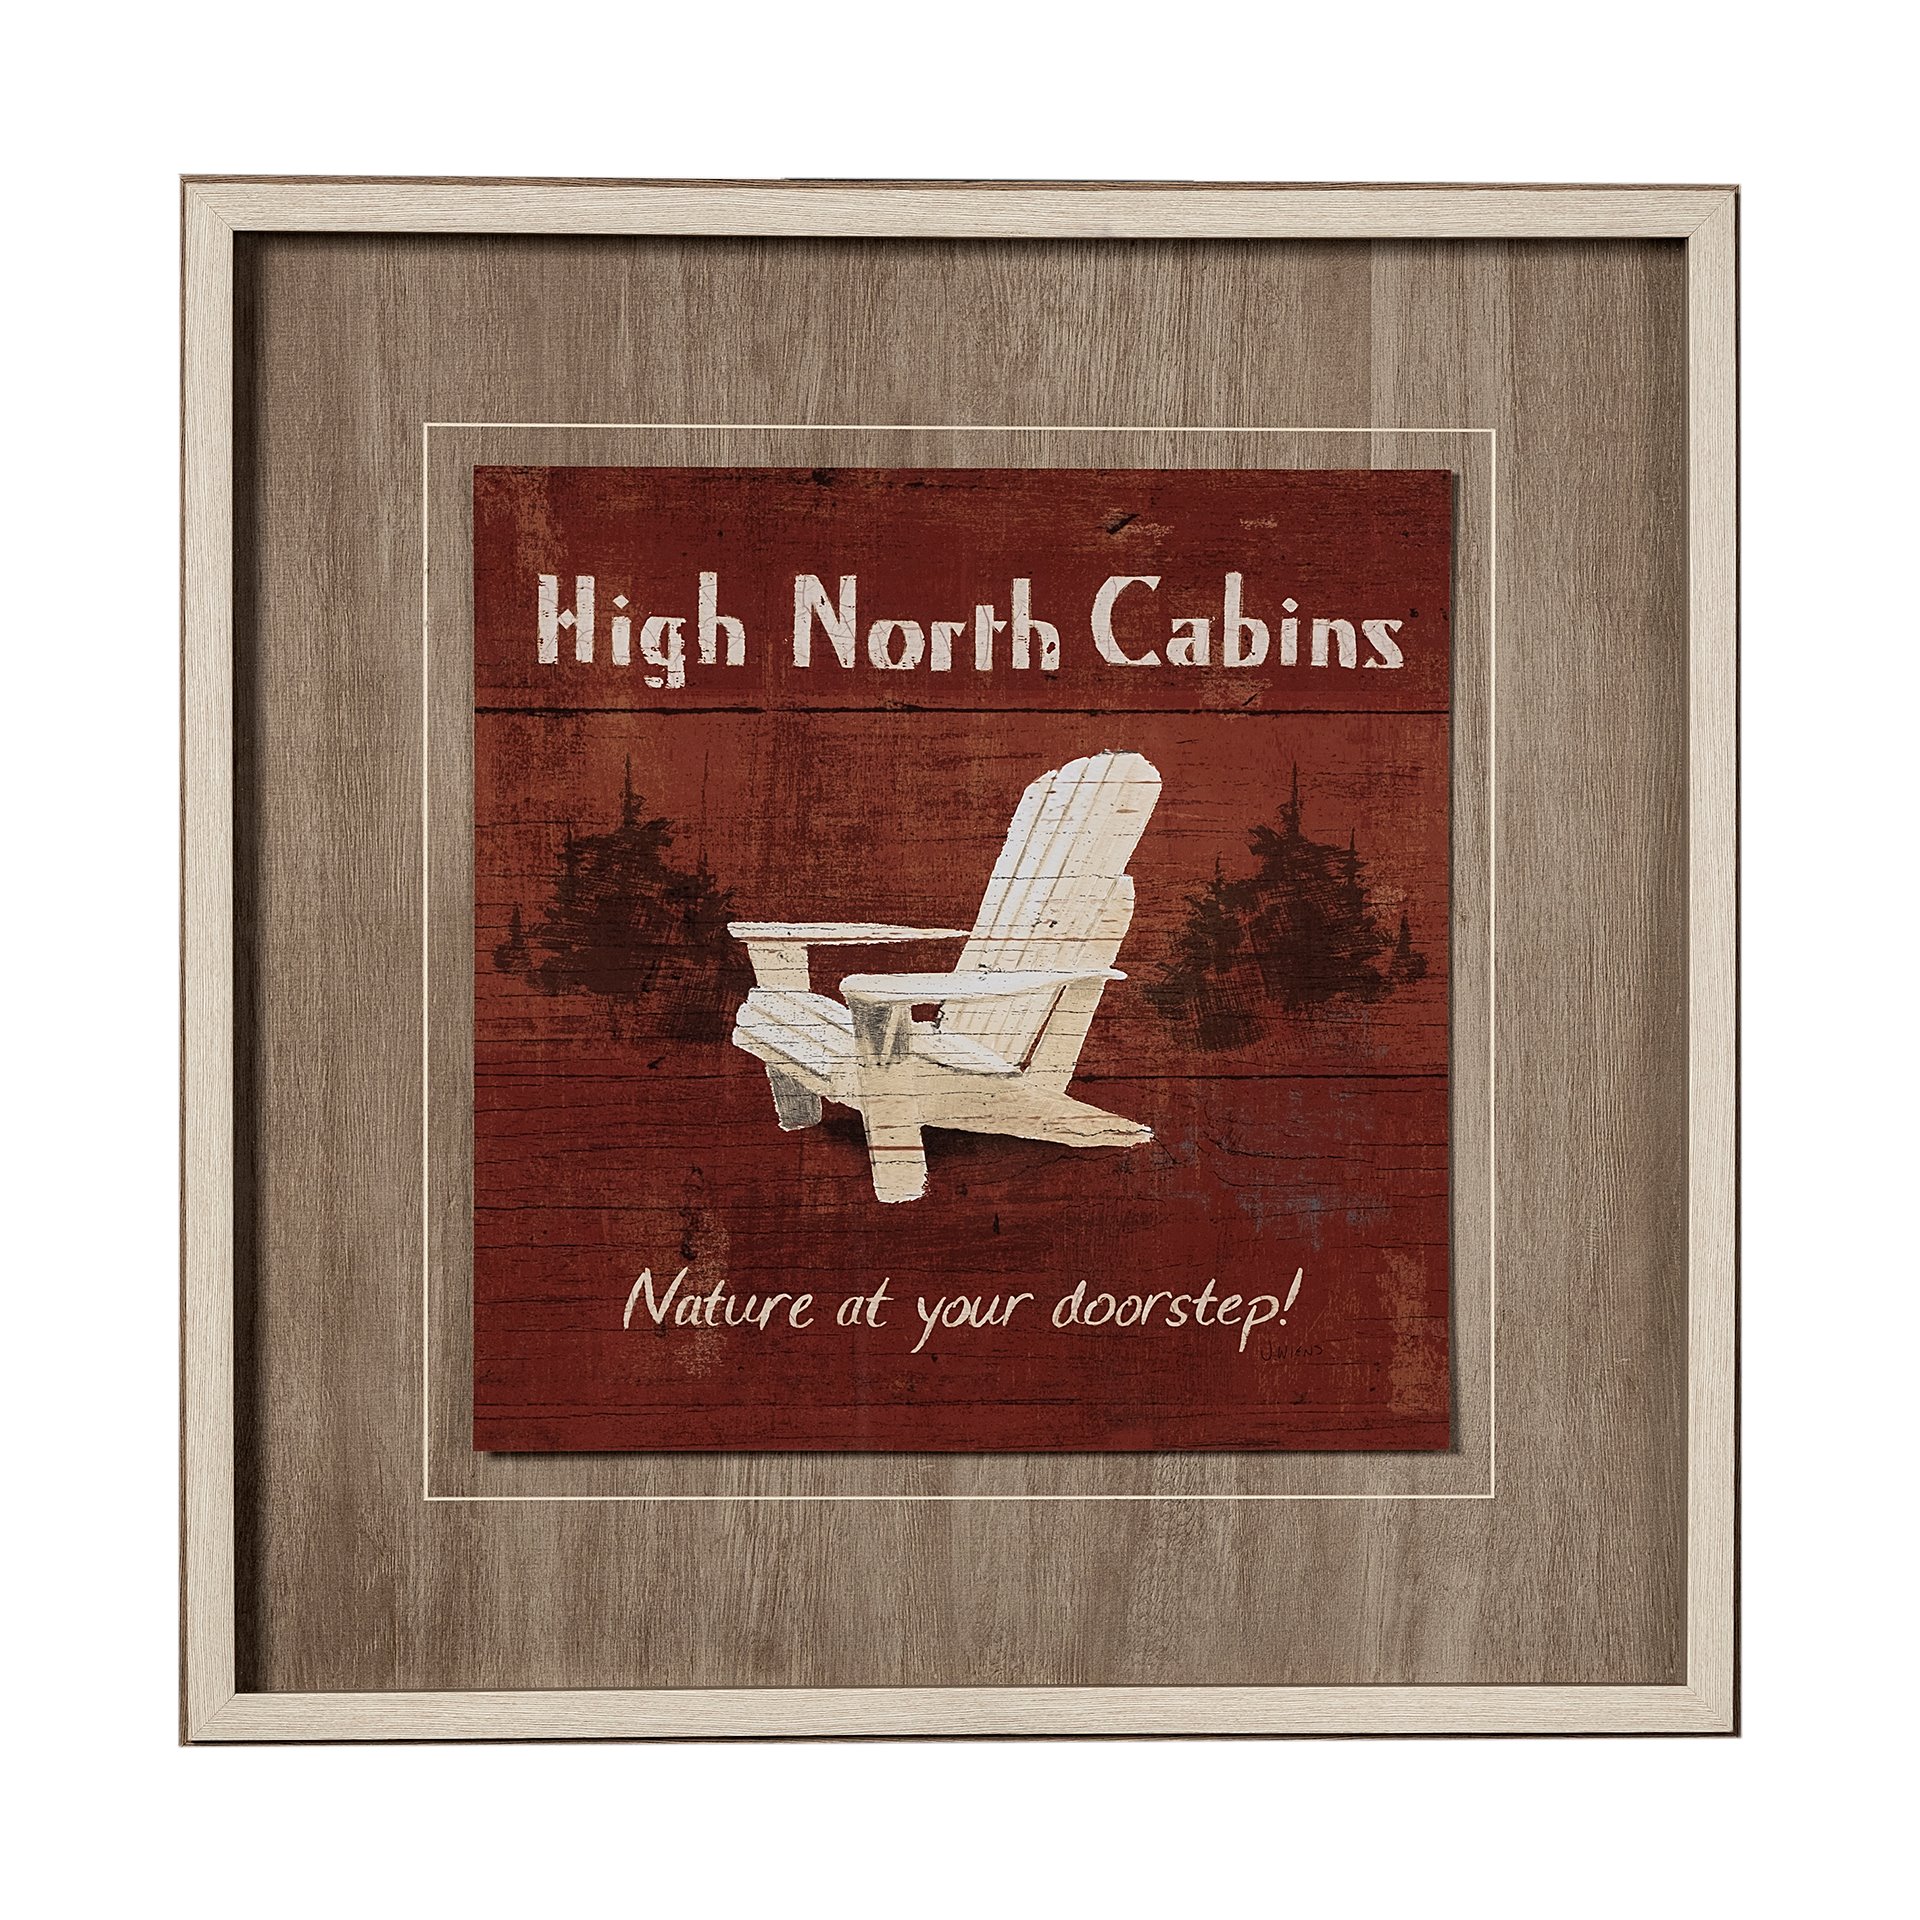 High North Cabins (25 x 25)